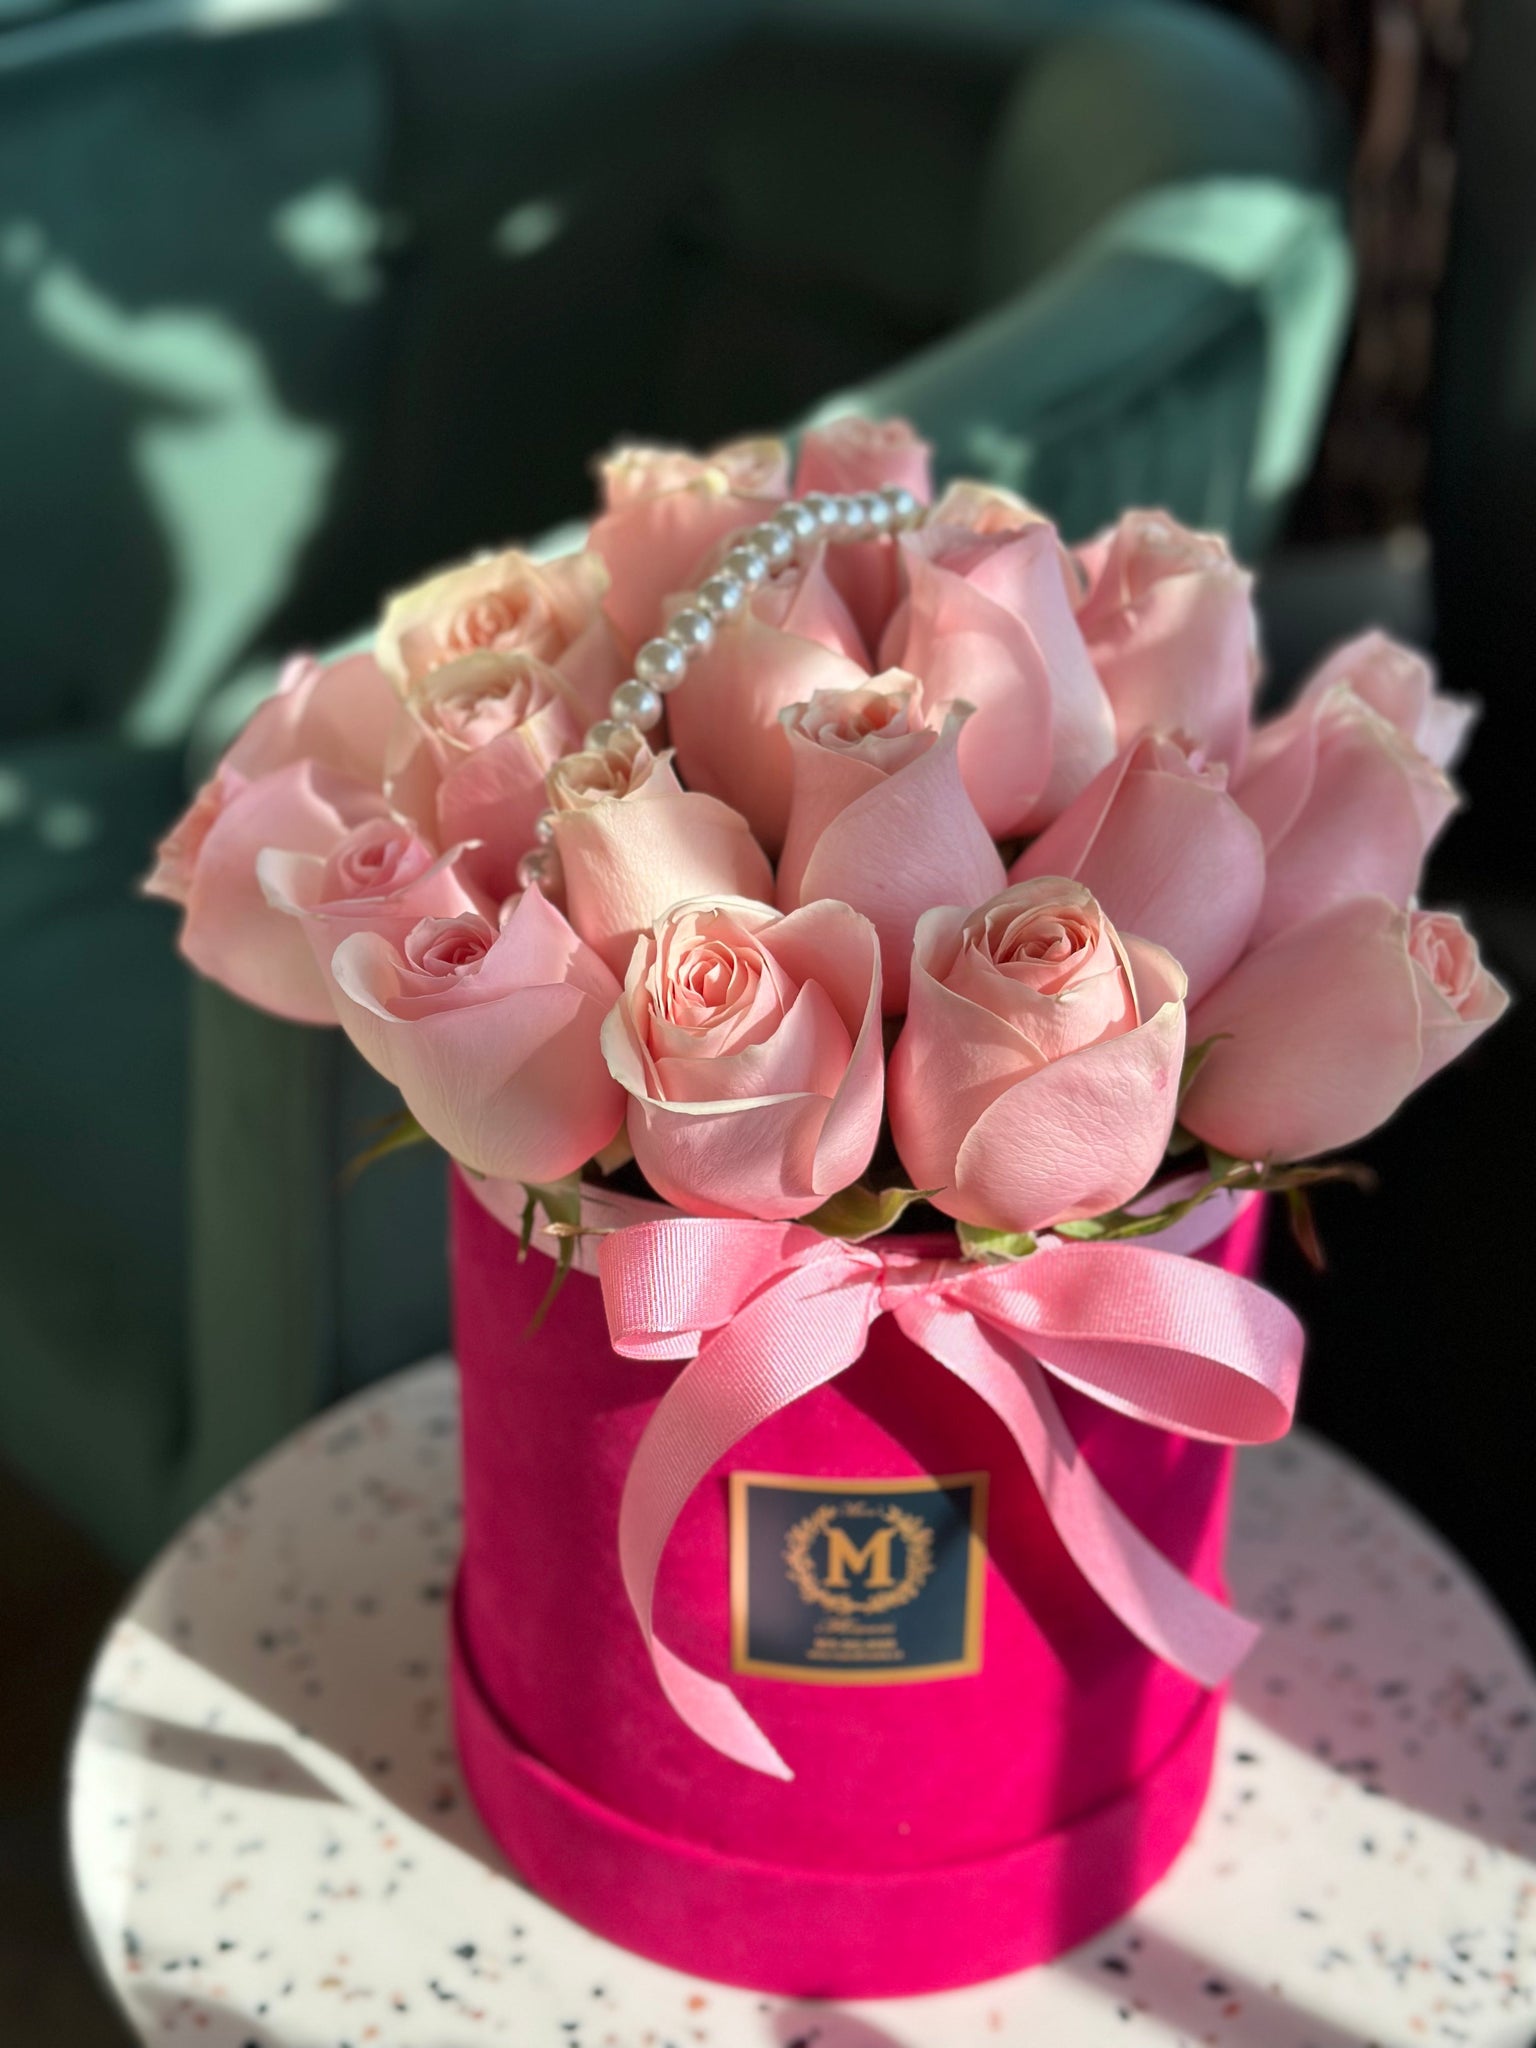 Valentine's Day - Rose Box